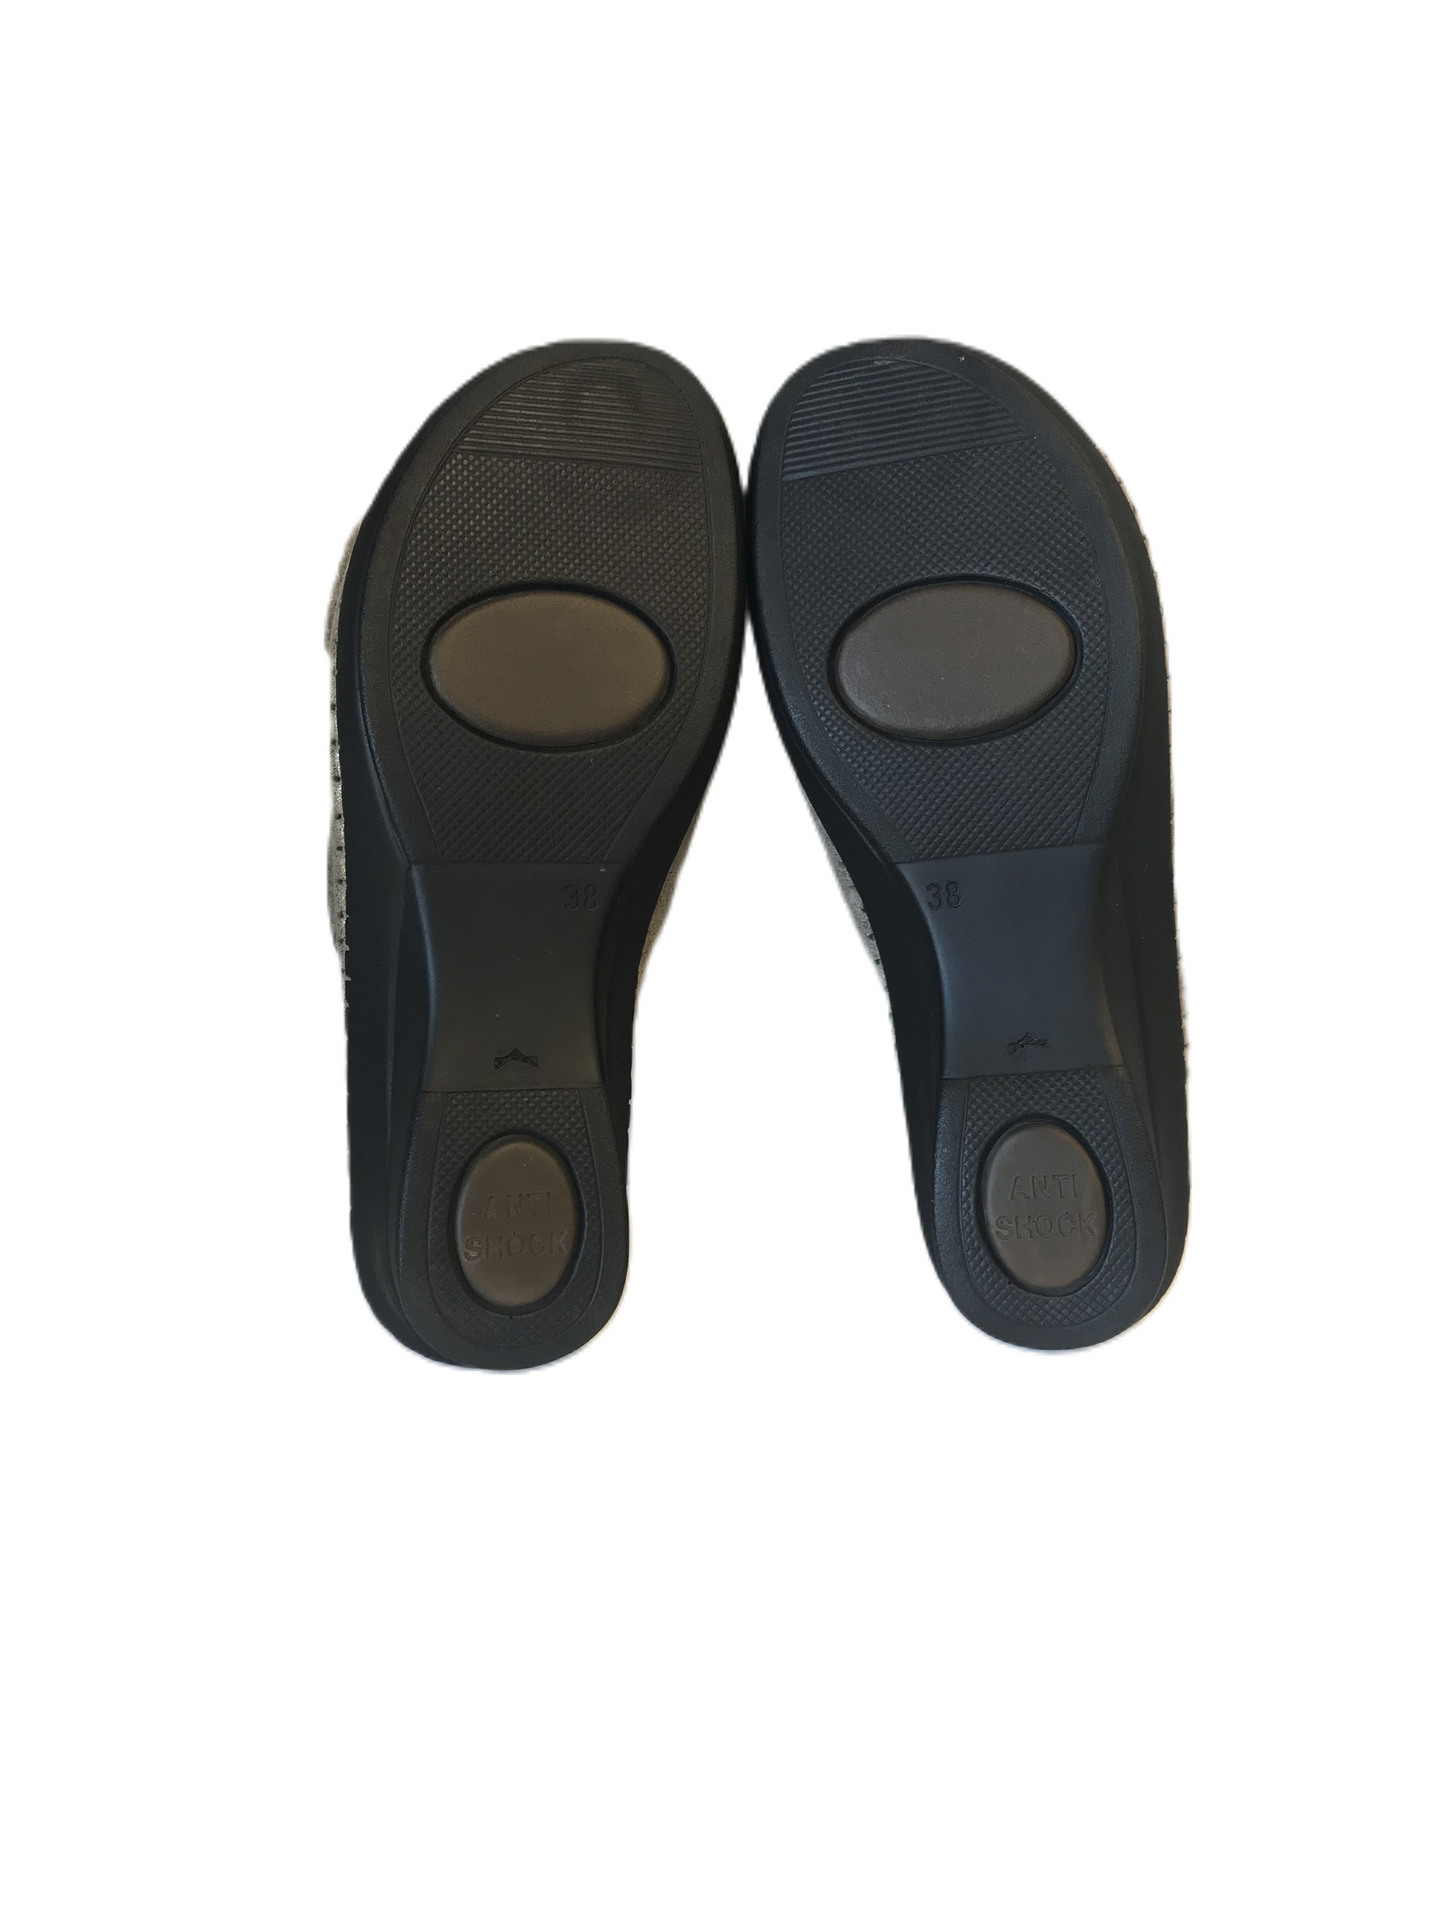 Sandals Heels Wedge By La Plume Size: 7.5